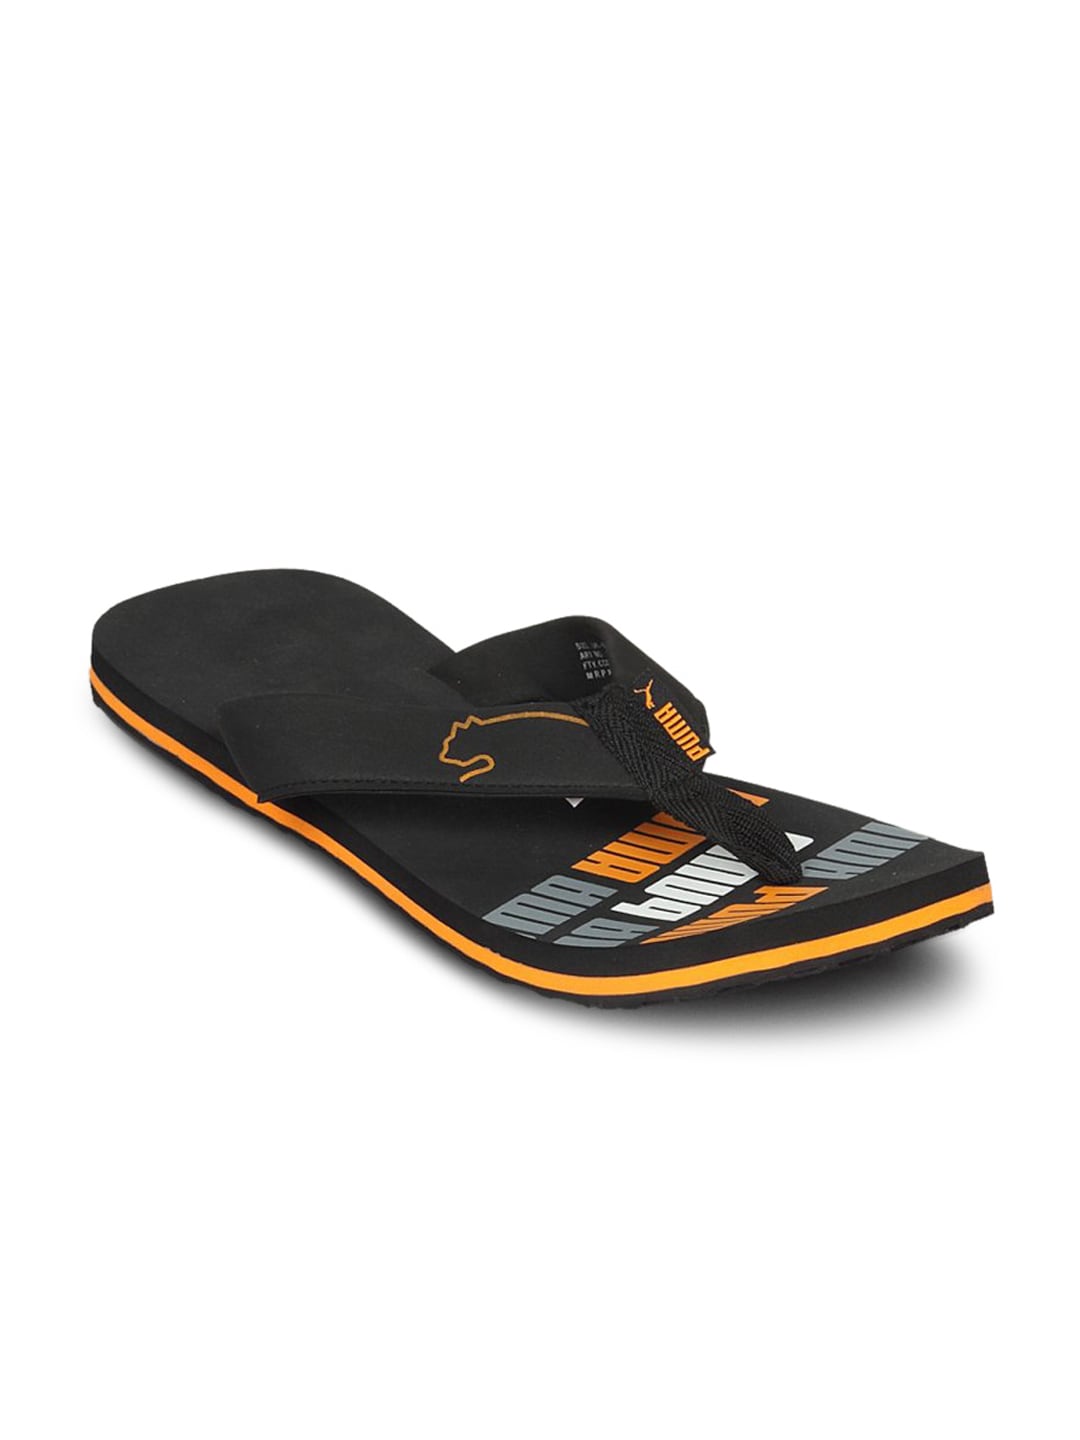 Puma Unisex Issac Black Orange Flip Flop